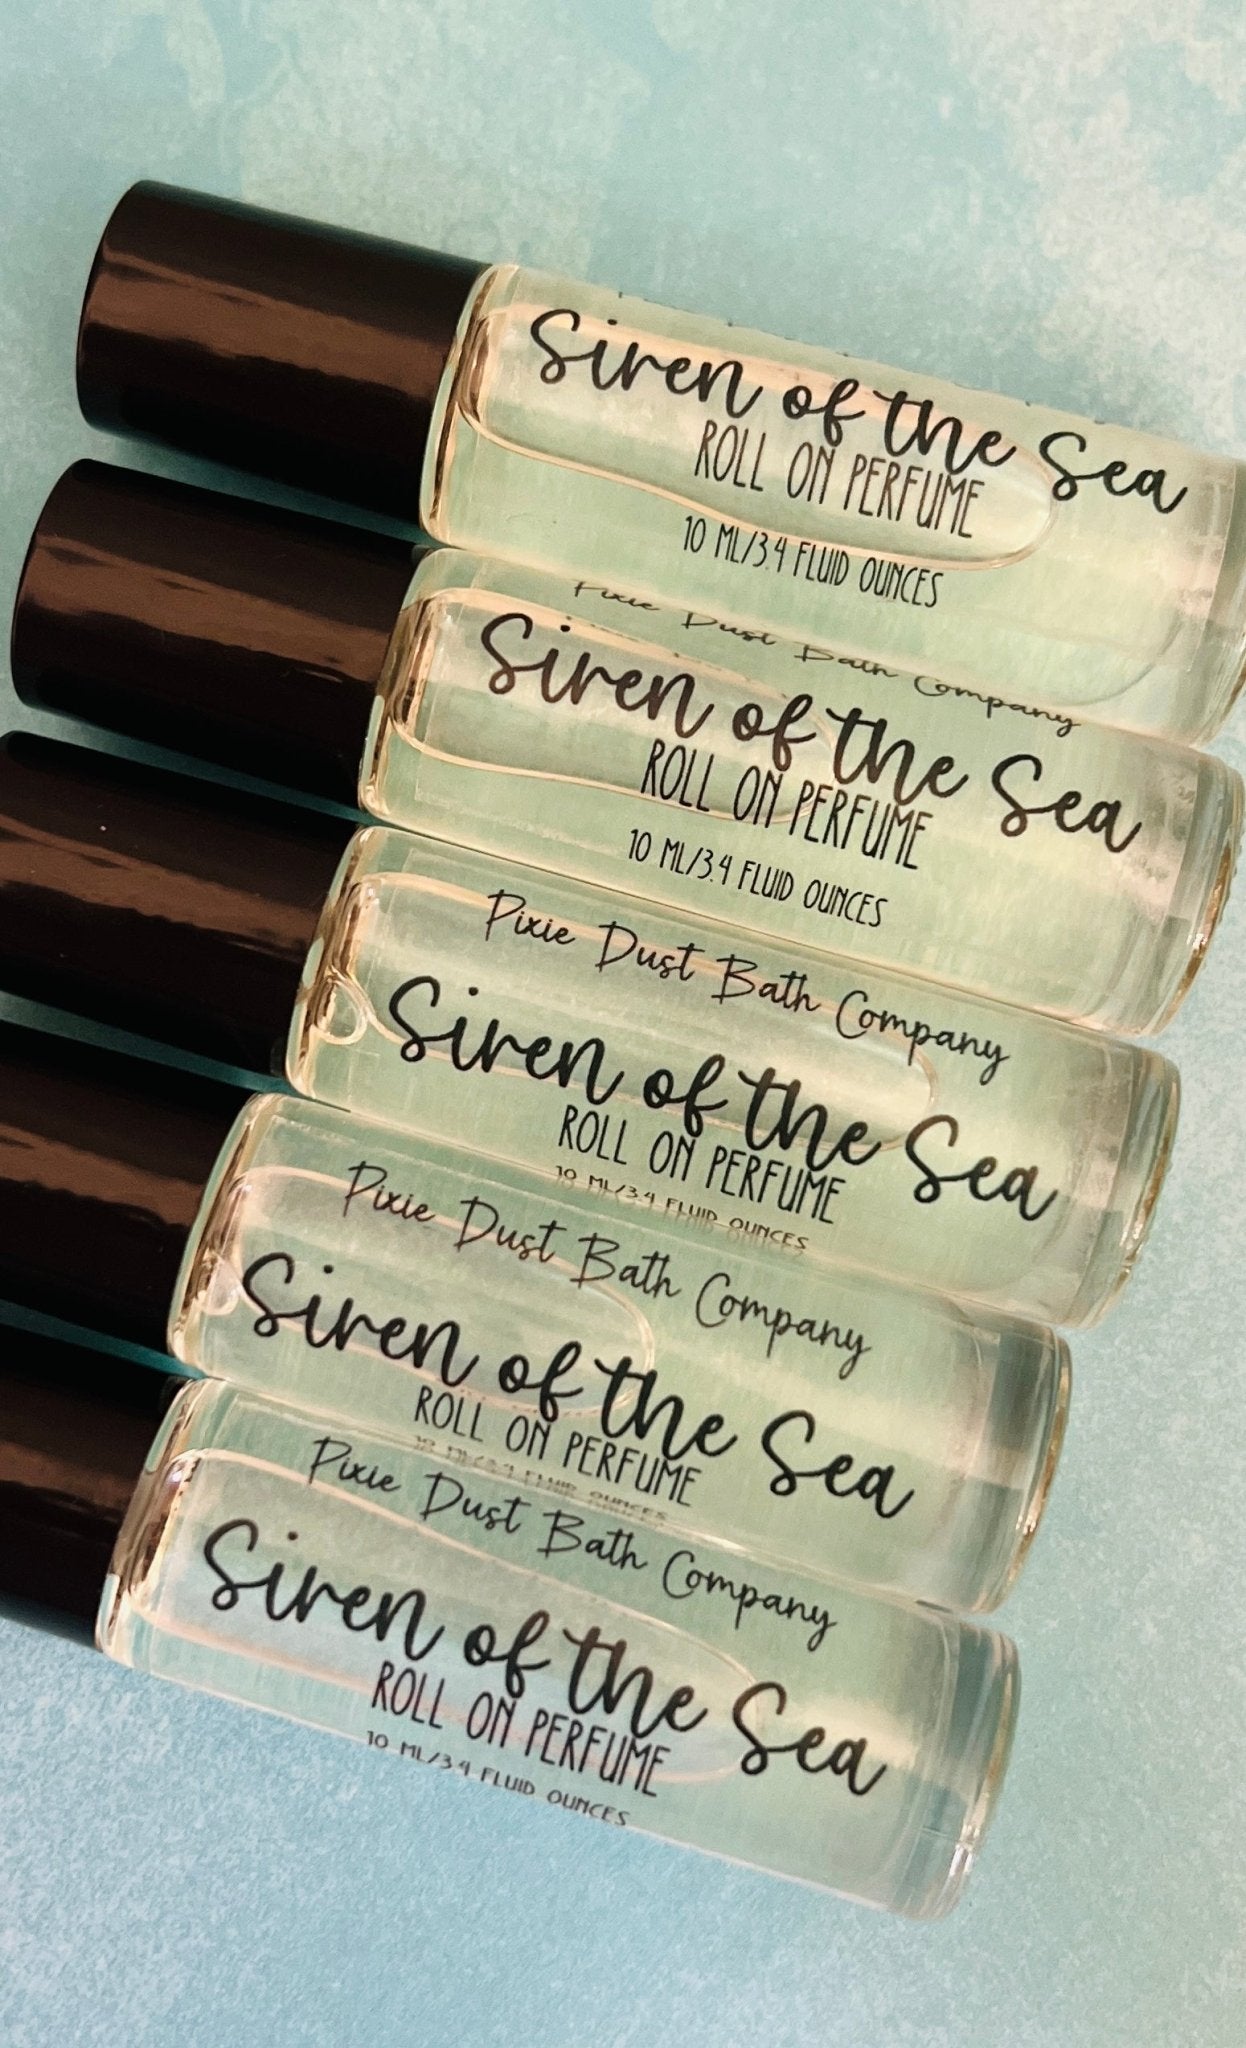 Siren of the Sea Roll On Perfume Oil - Pixie Dust Bath Company